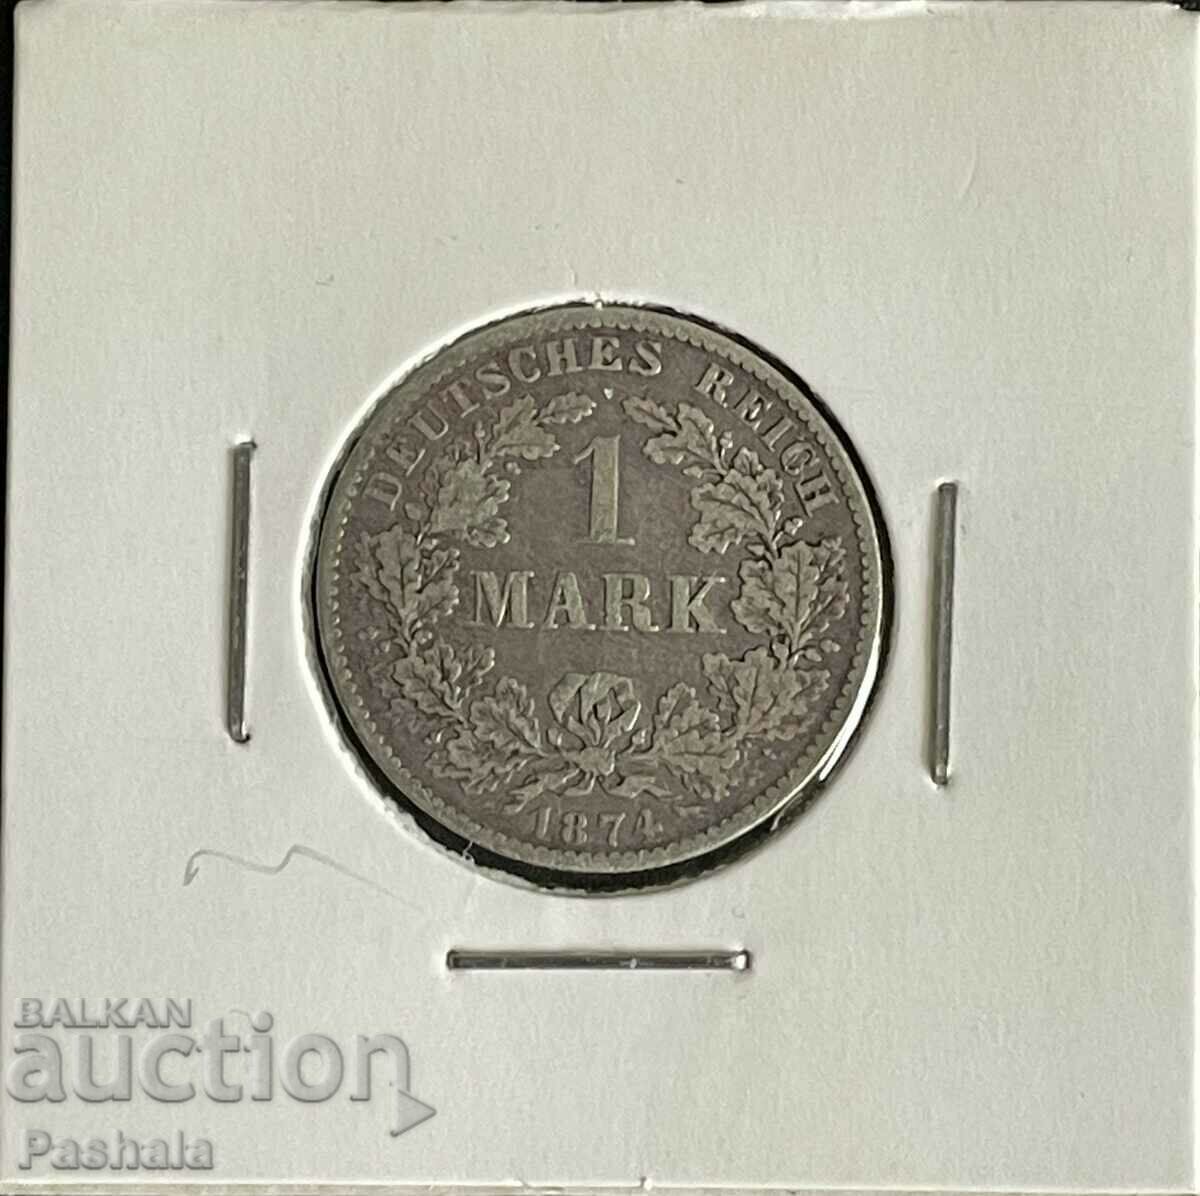 Germany 1 mark 1874 silver